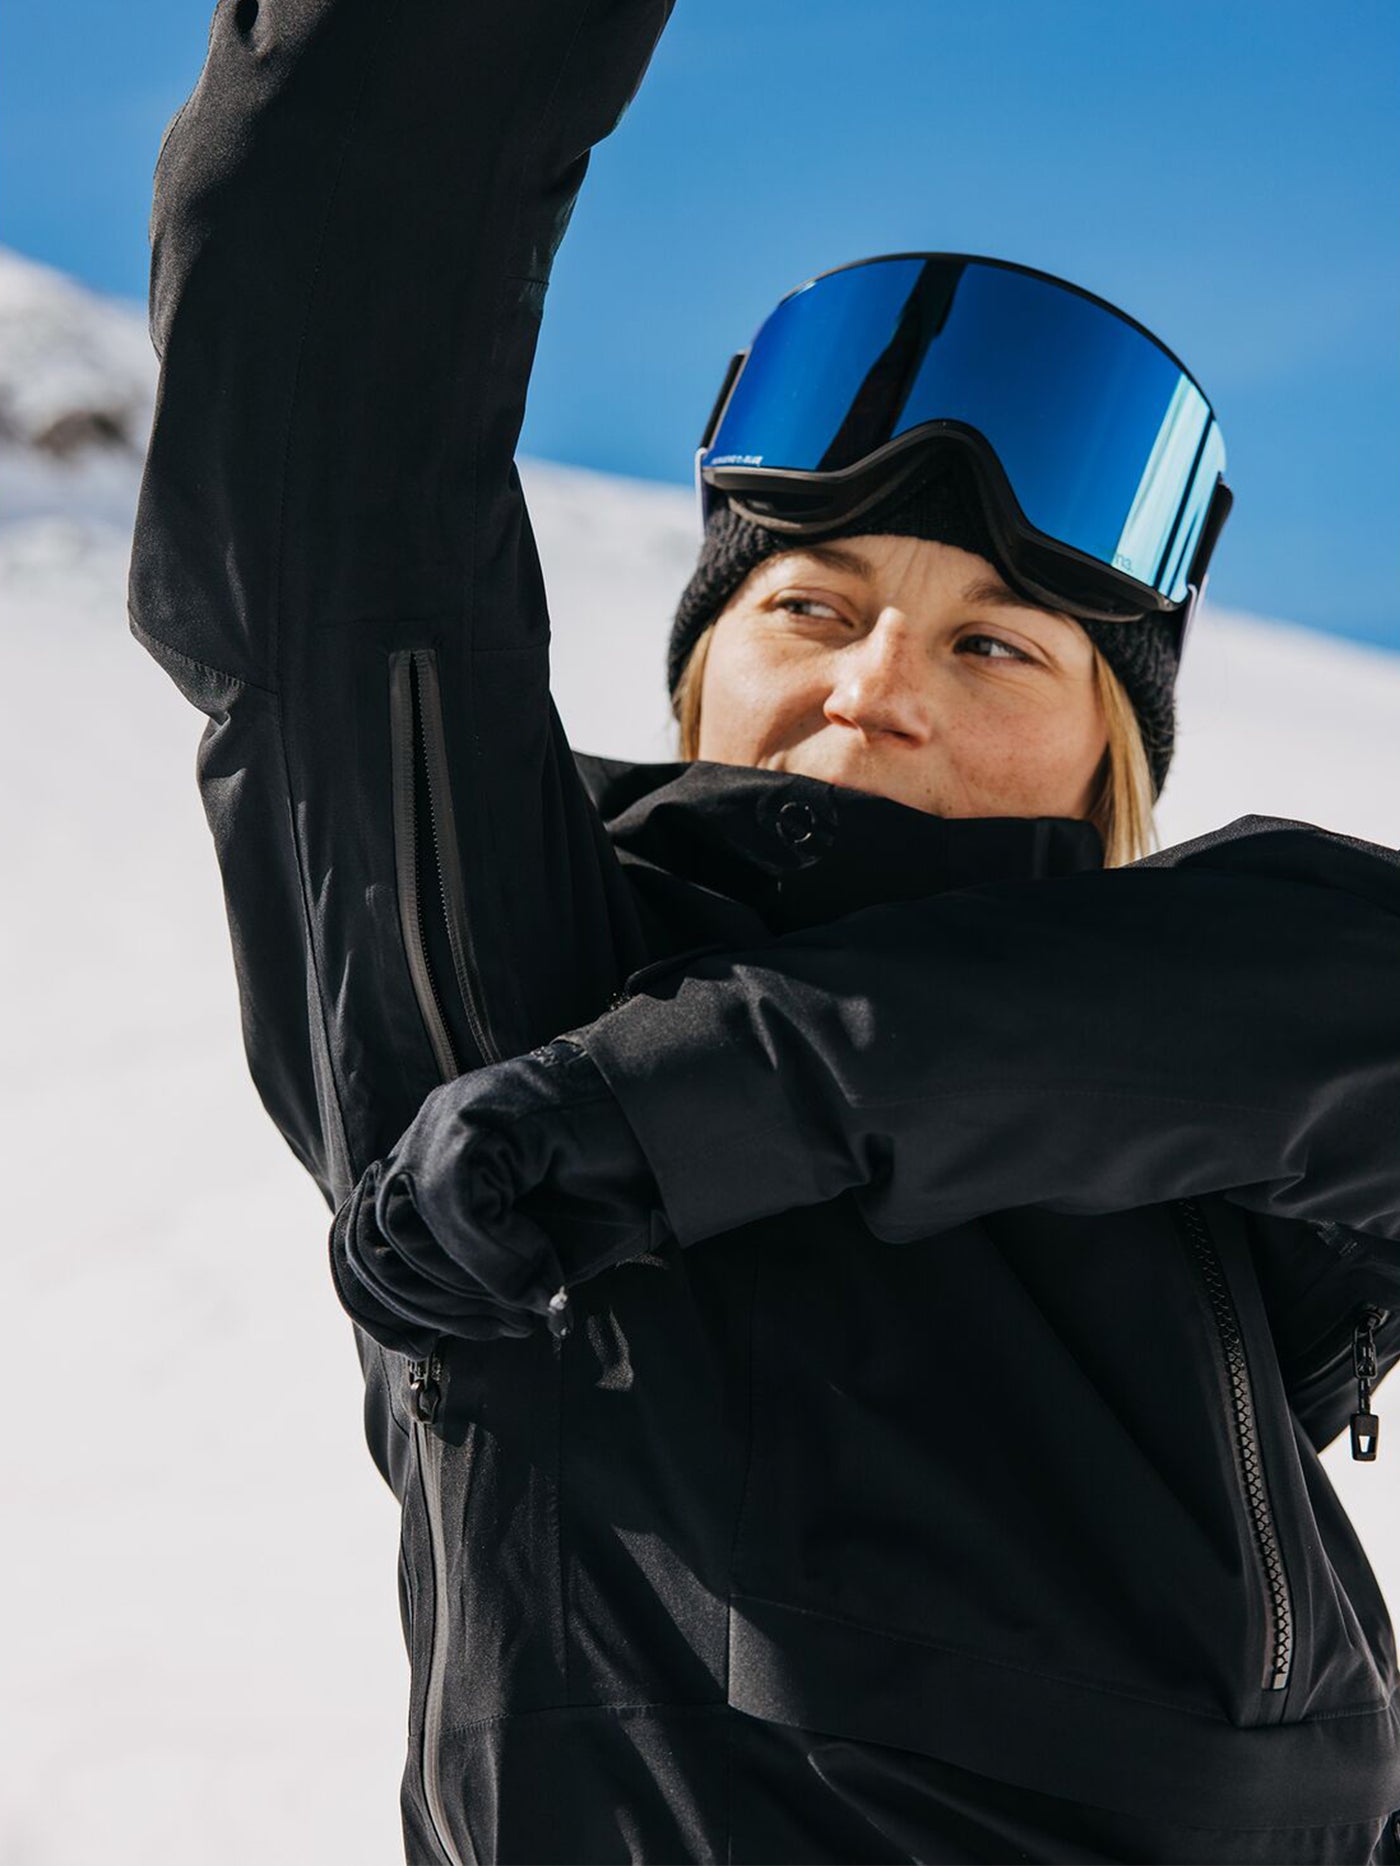 Burton [ak] GORE-TEX Kimmy Anorak Snowboard Jacket 2024